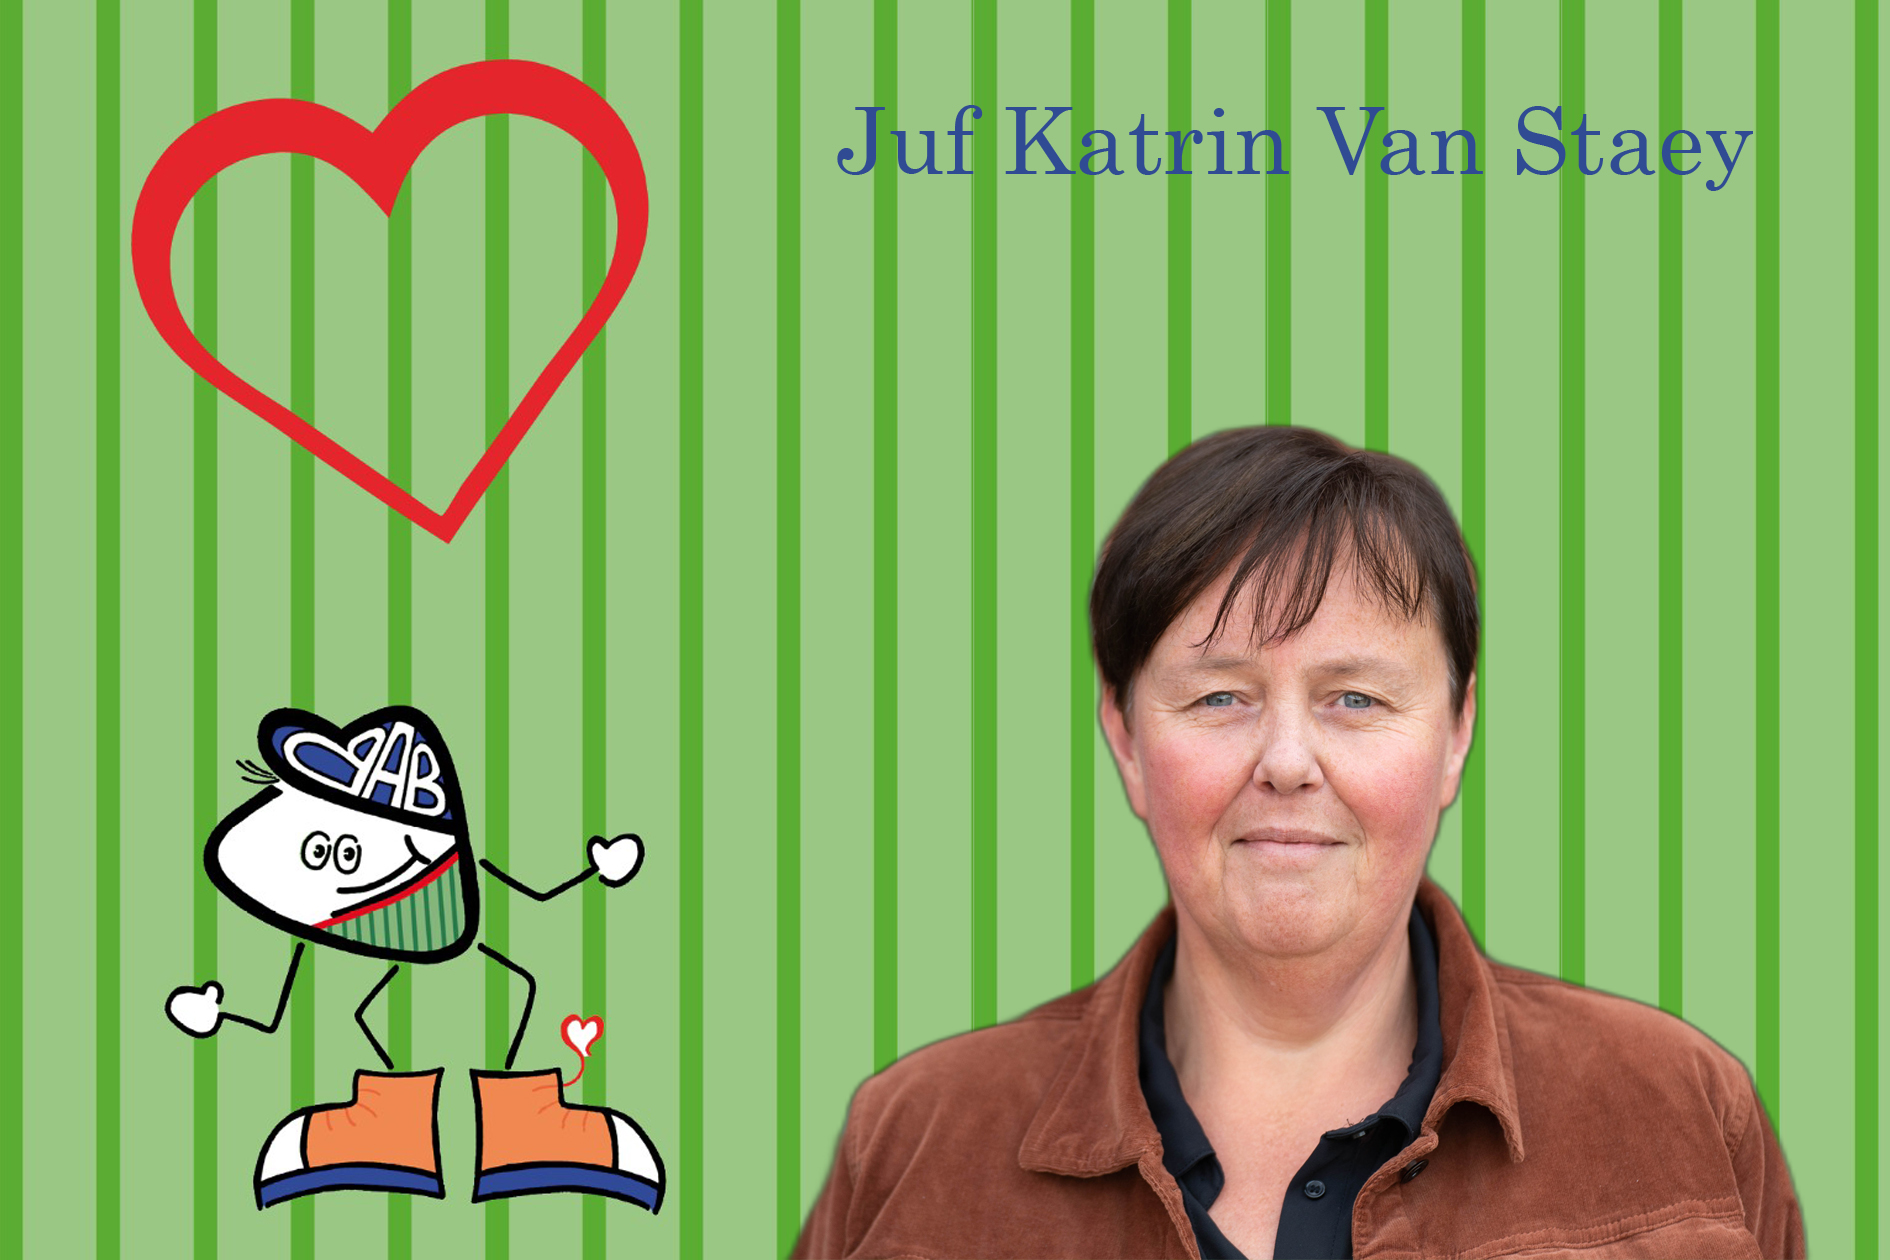 Katrin Van Staey